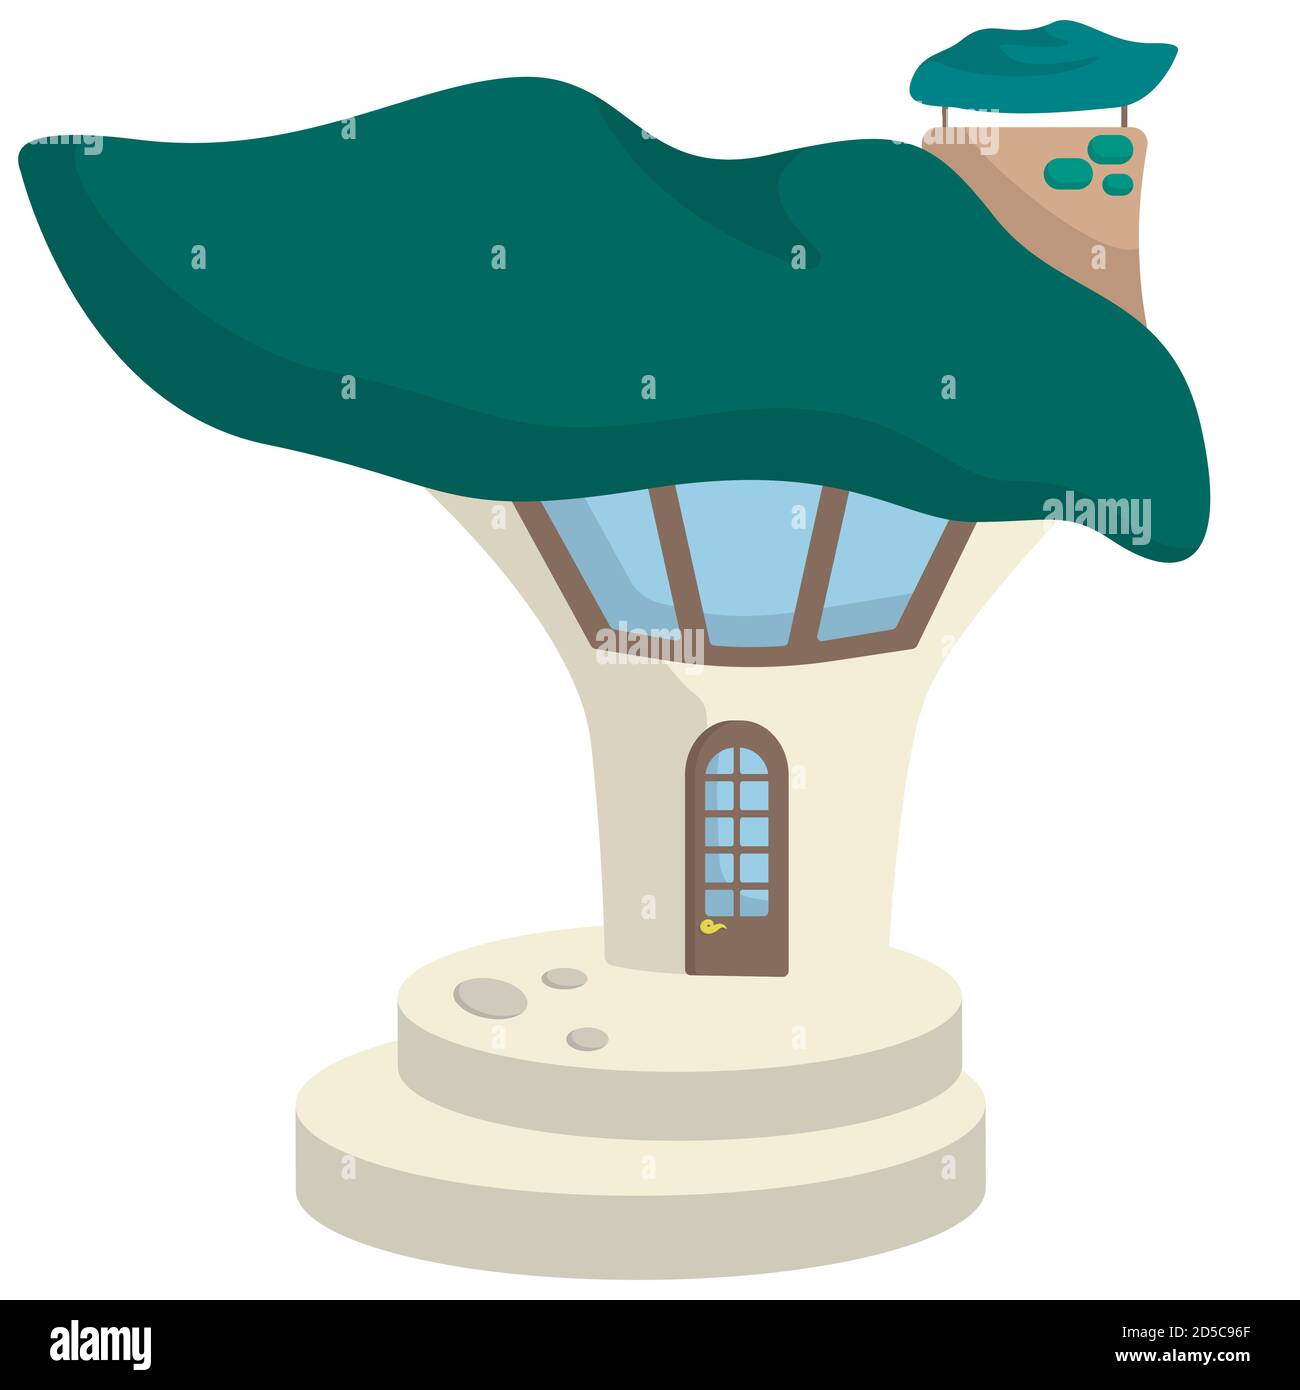 Beautiful mushroom house. Fairytale building exterior in cartoon style. Stock Vector